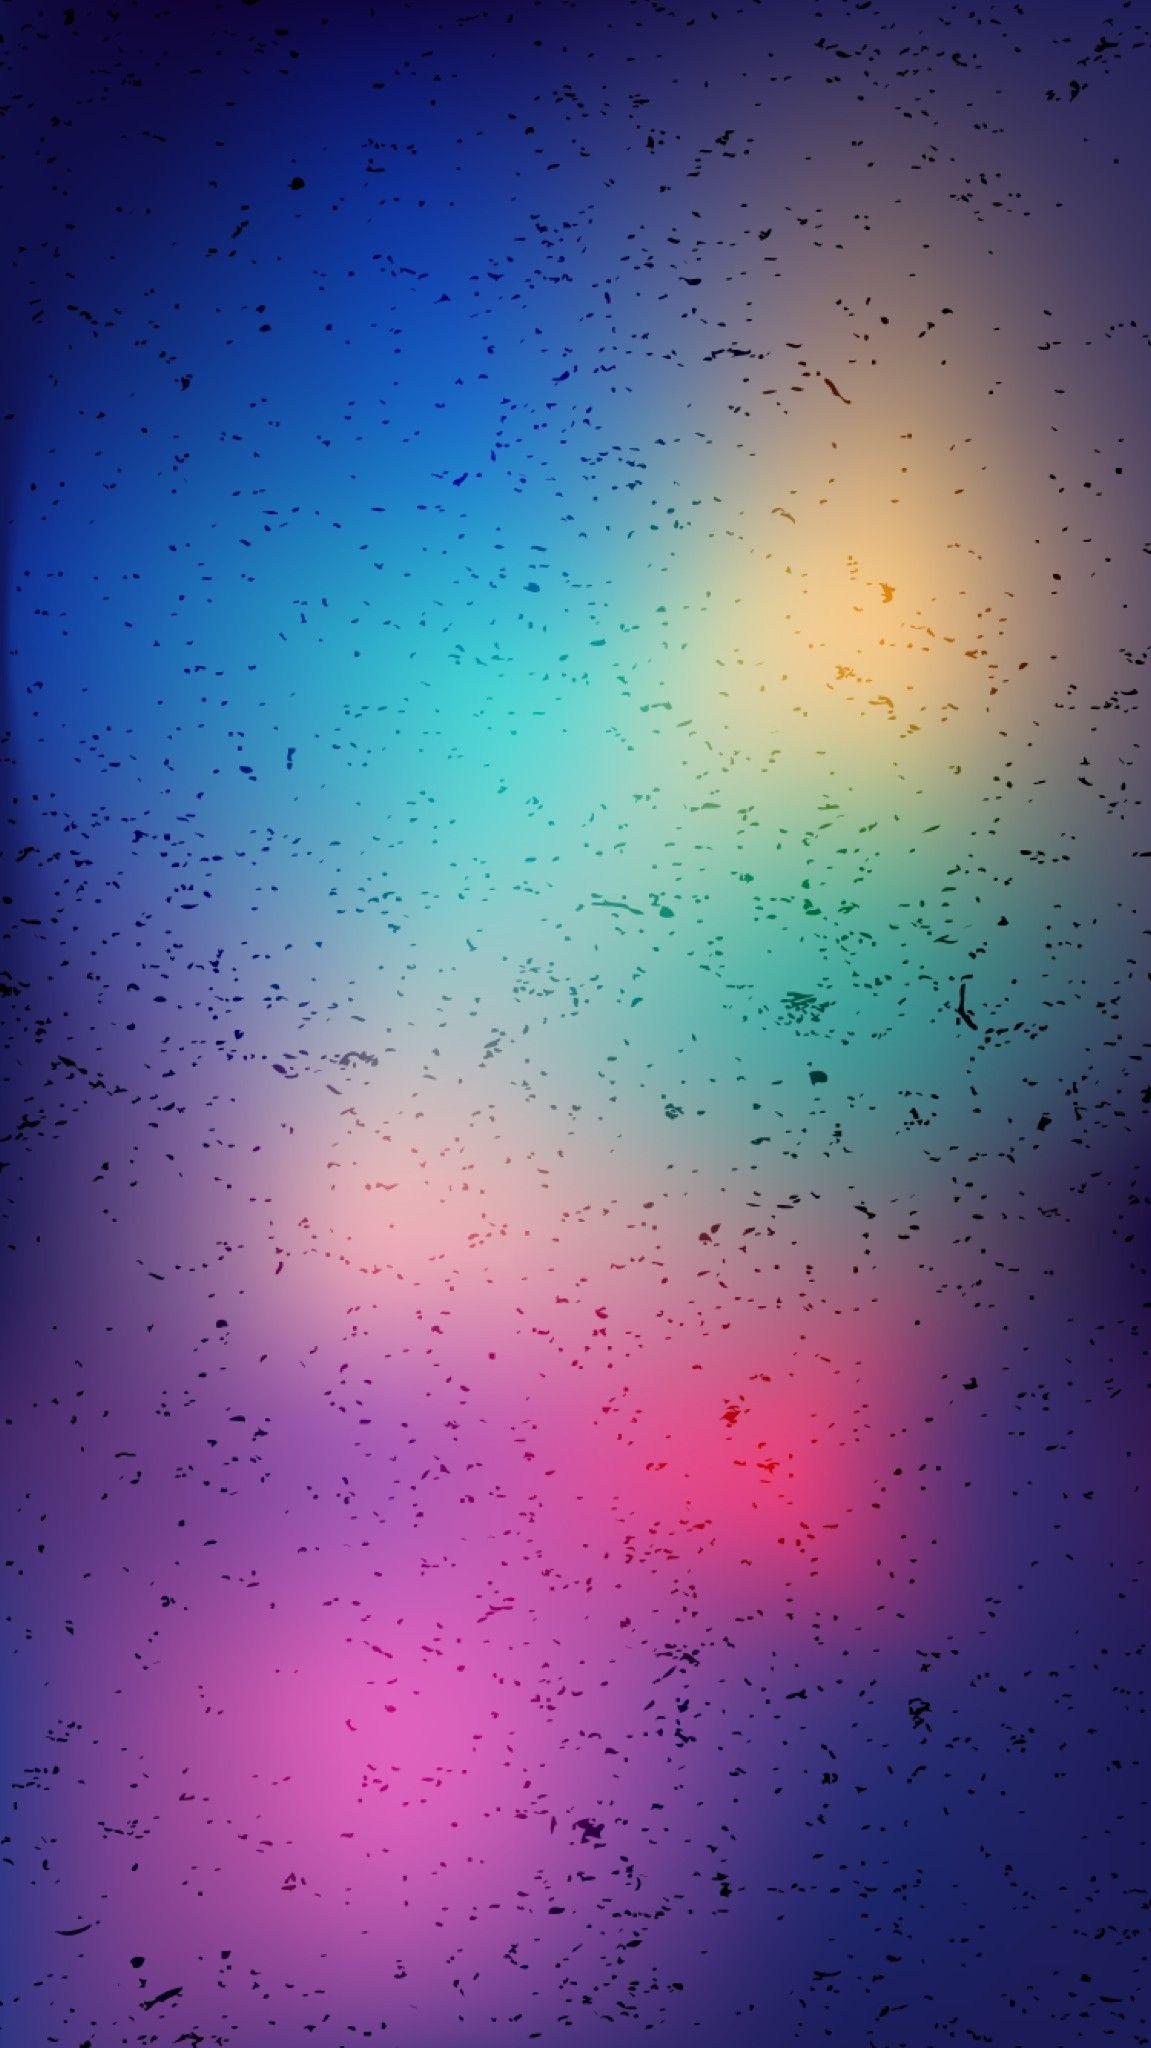 jonas. Galaxy wallpaper, Apple wallpaper iphone, iPhone wallpaper blur